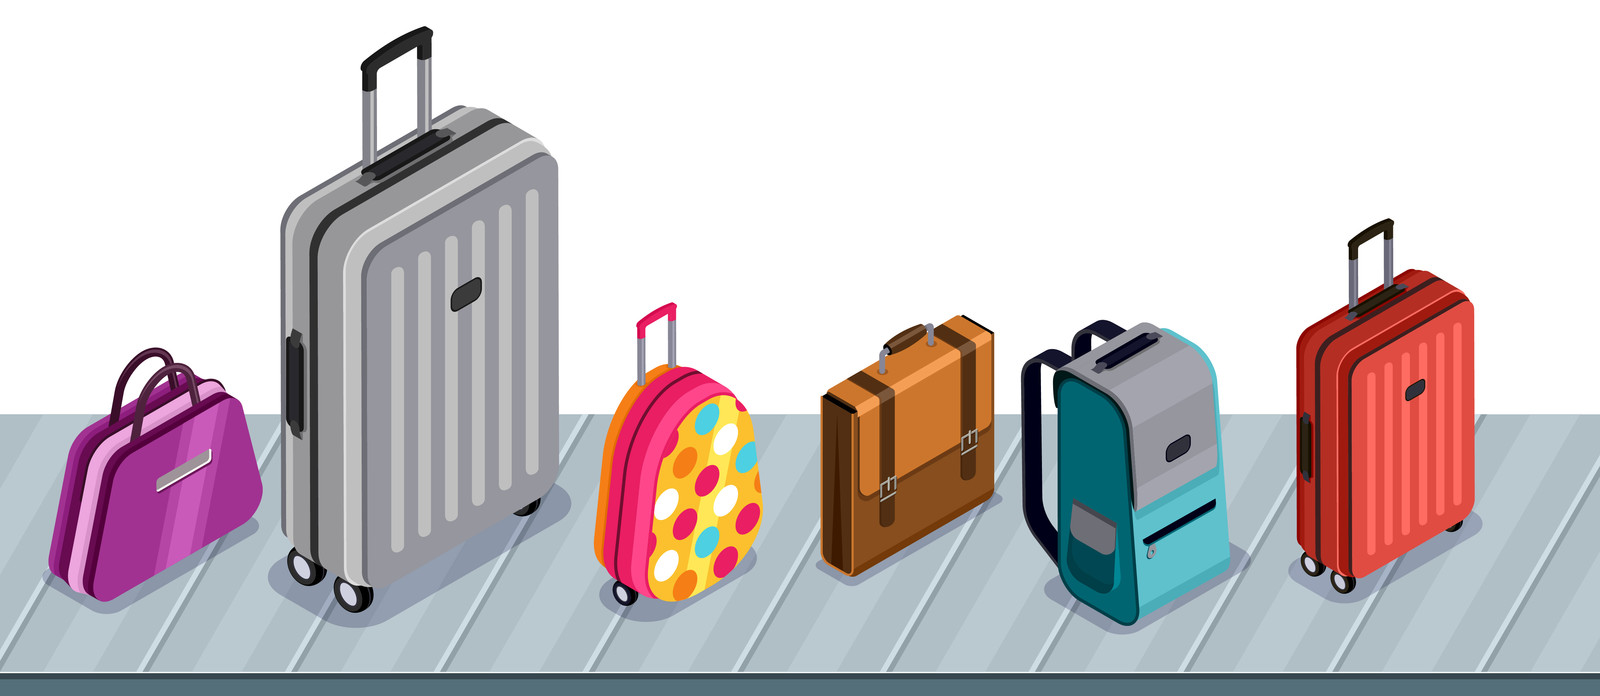 Baggage claim иллюстрации